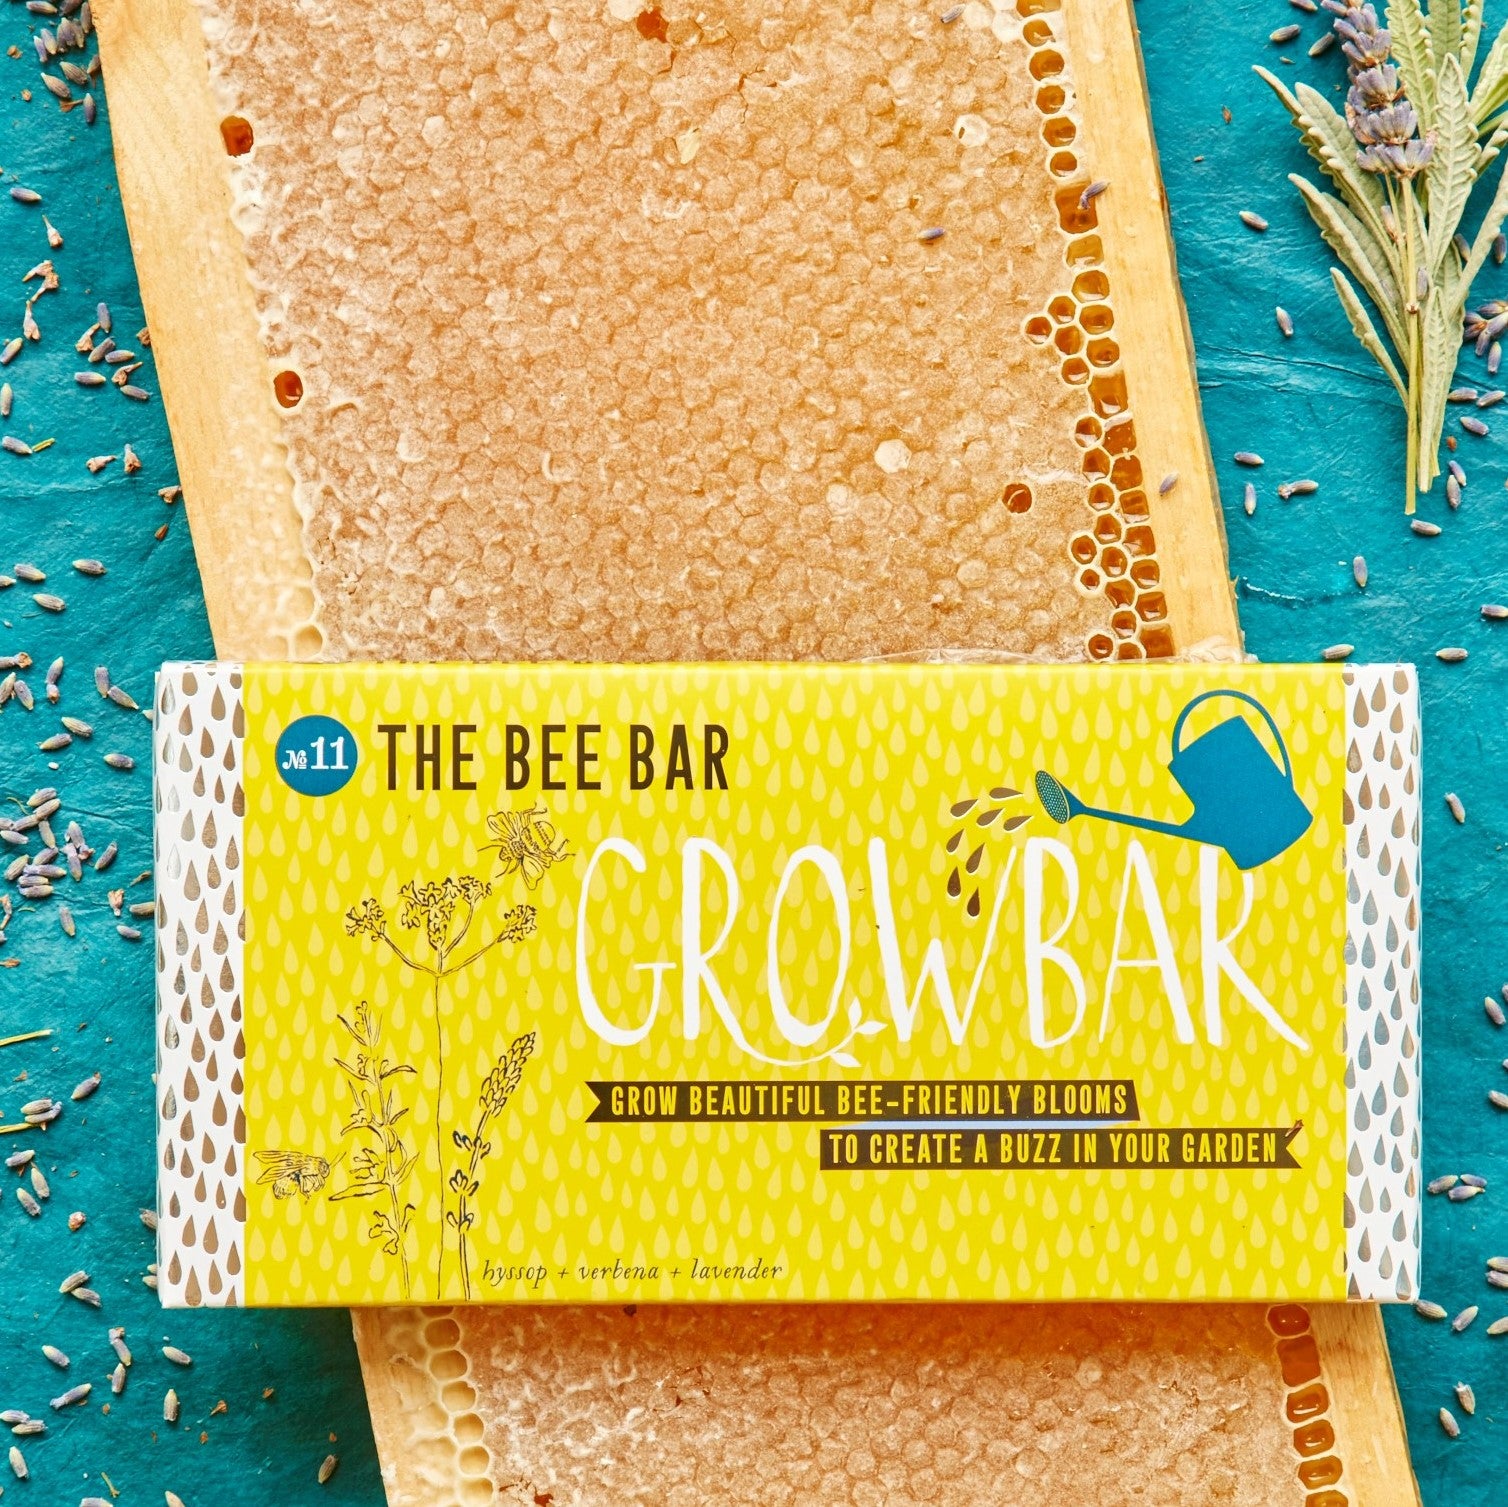 Growbar- The Bee Bar